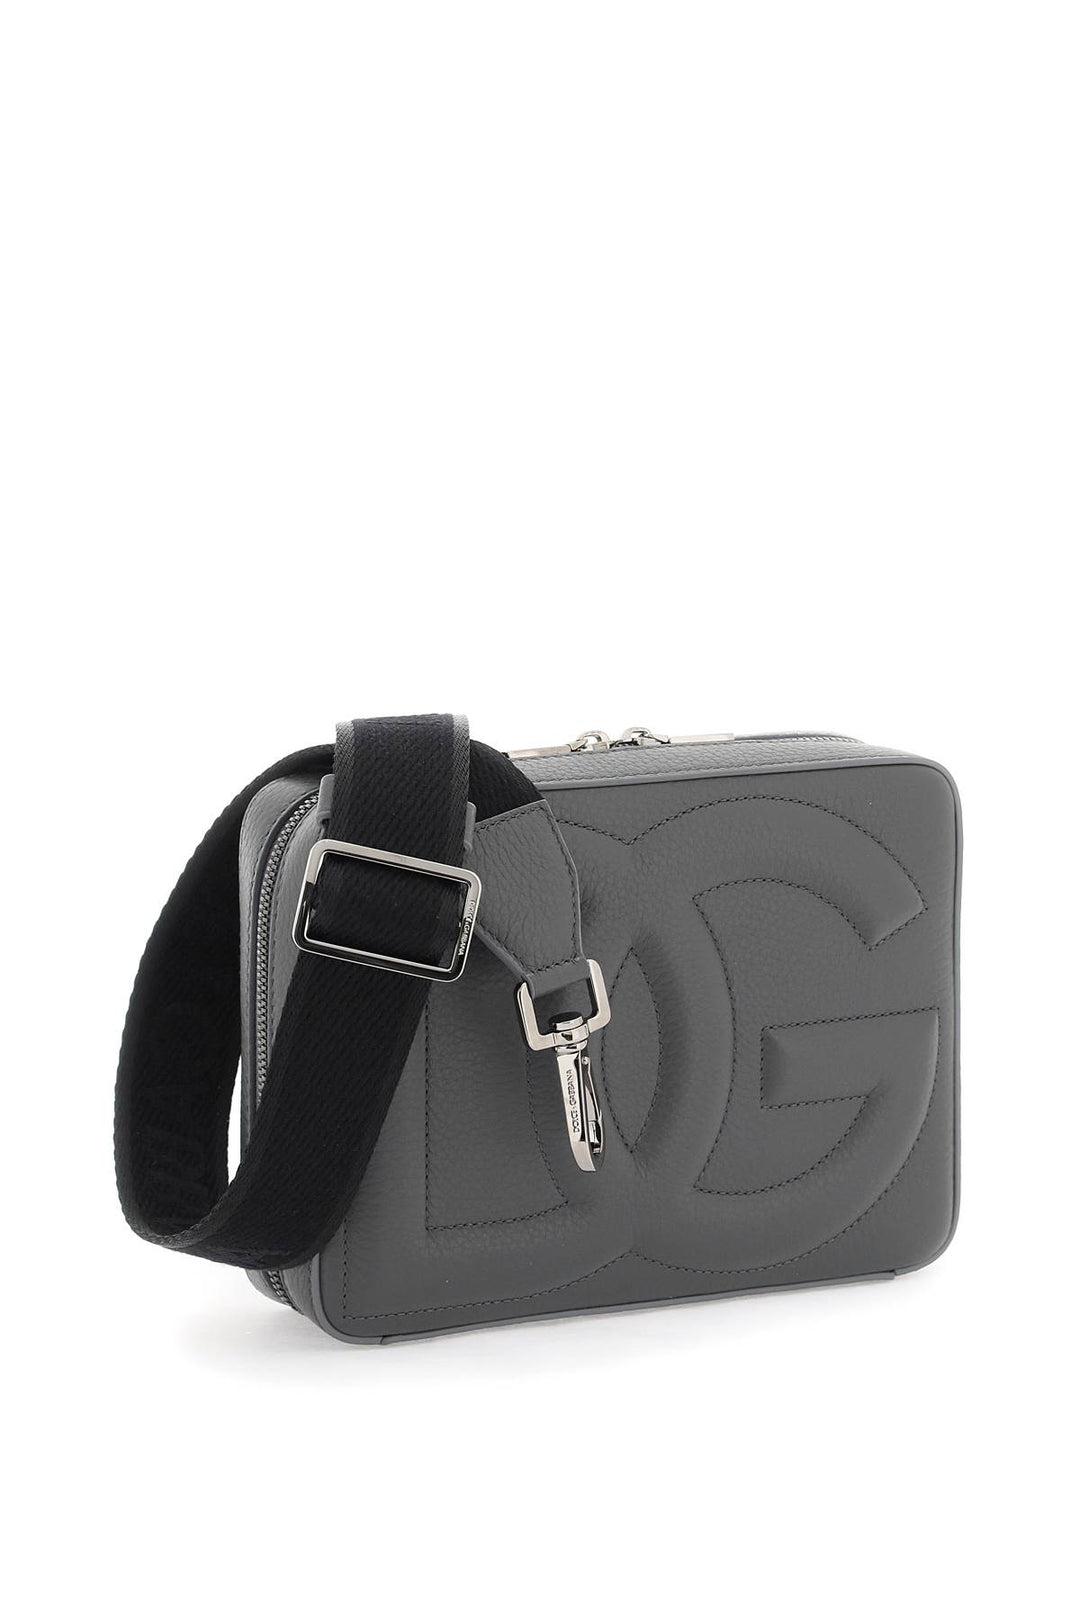 Dolce & Gabbana Dg Logo Camera Bag For Photography   Grigio